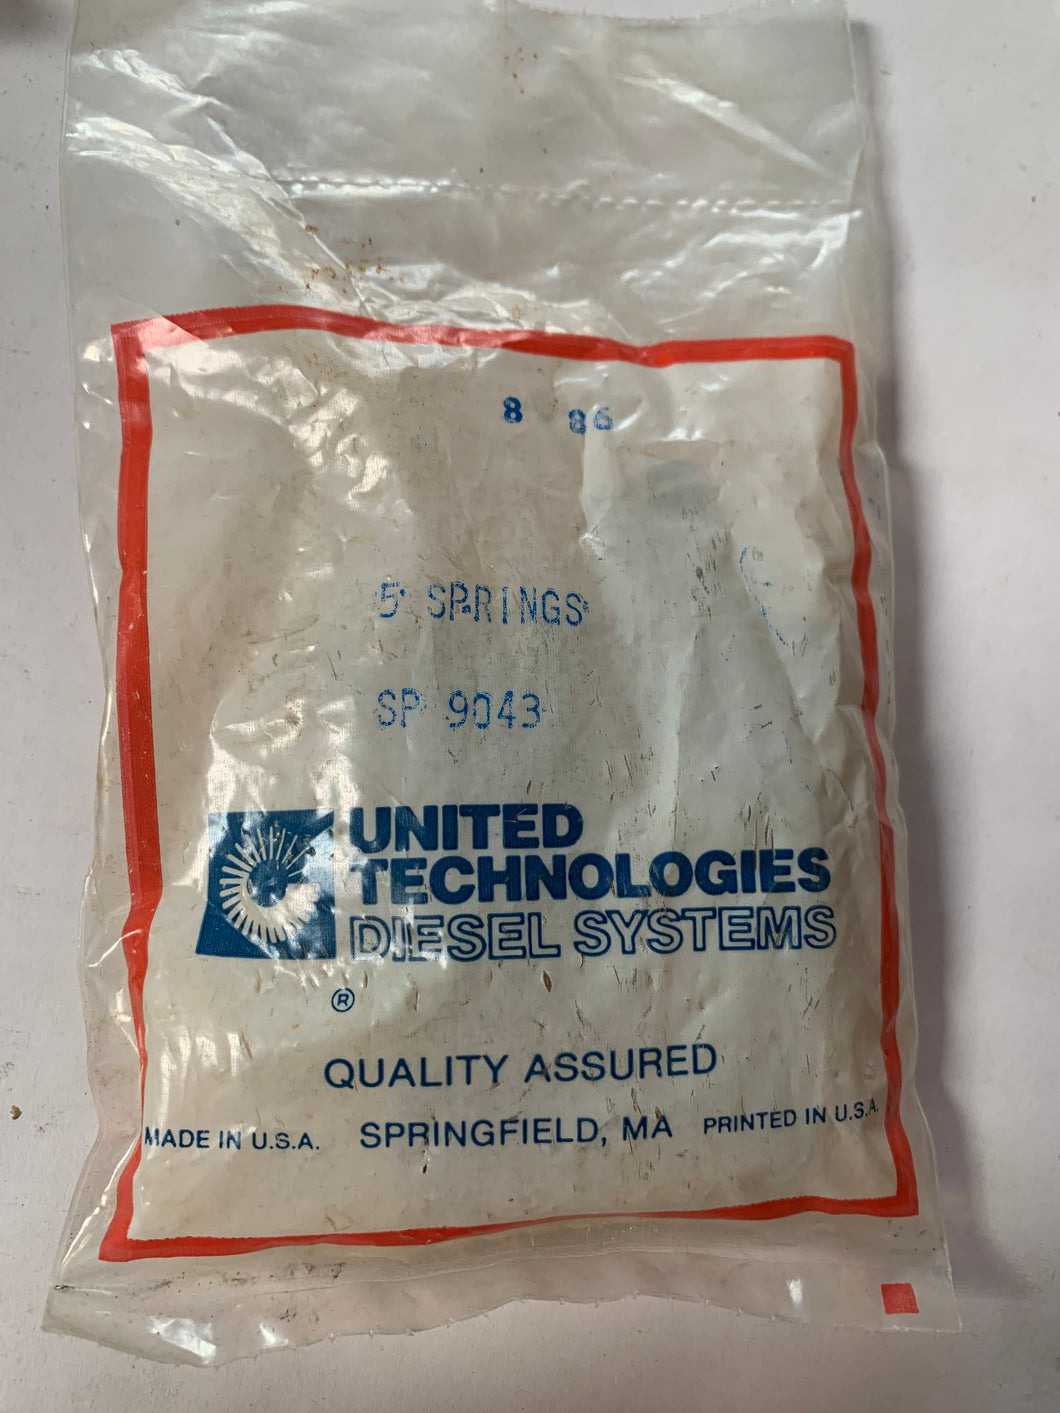 SP9043 - United Technologies